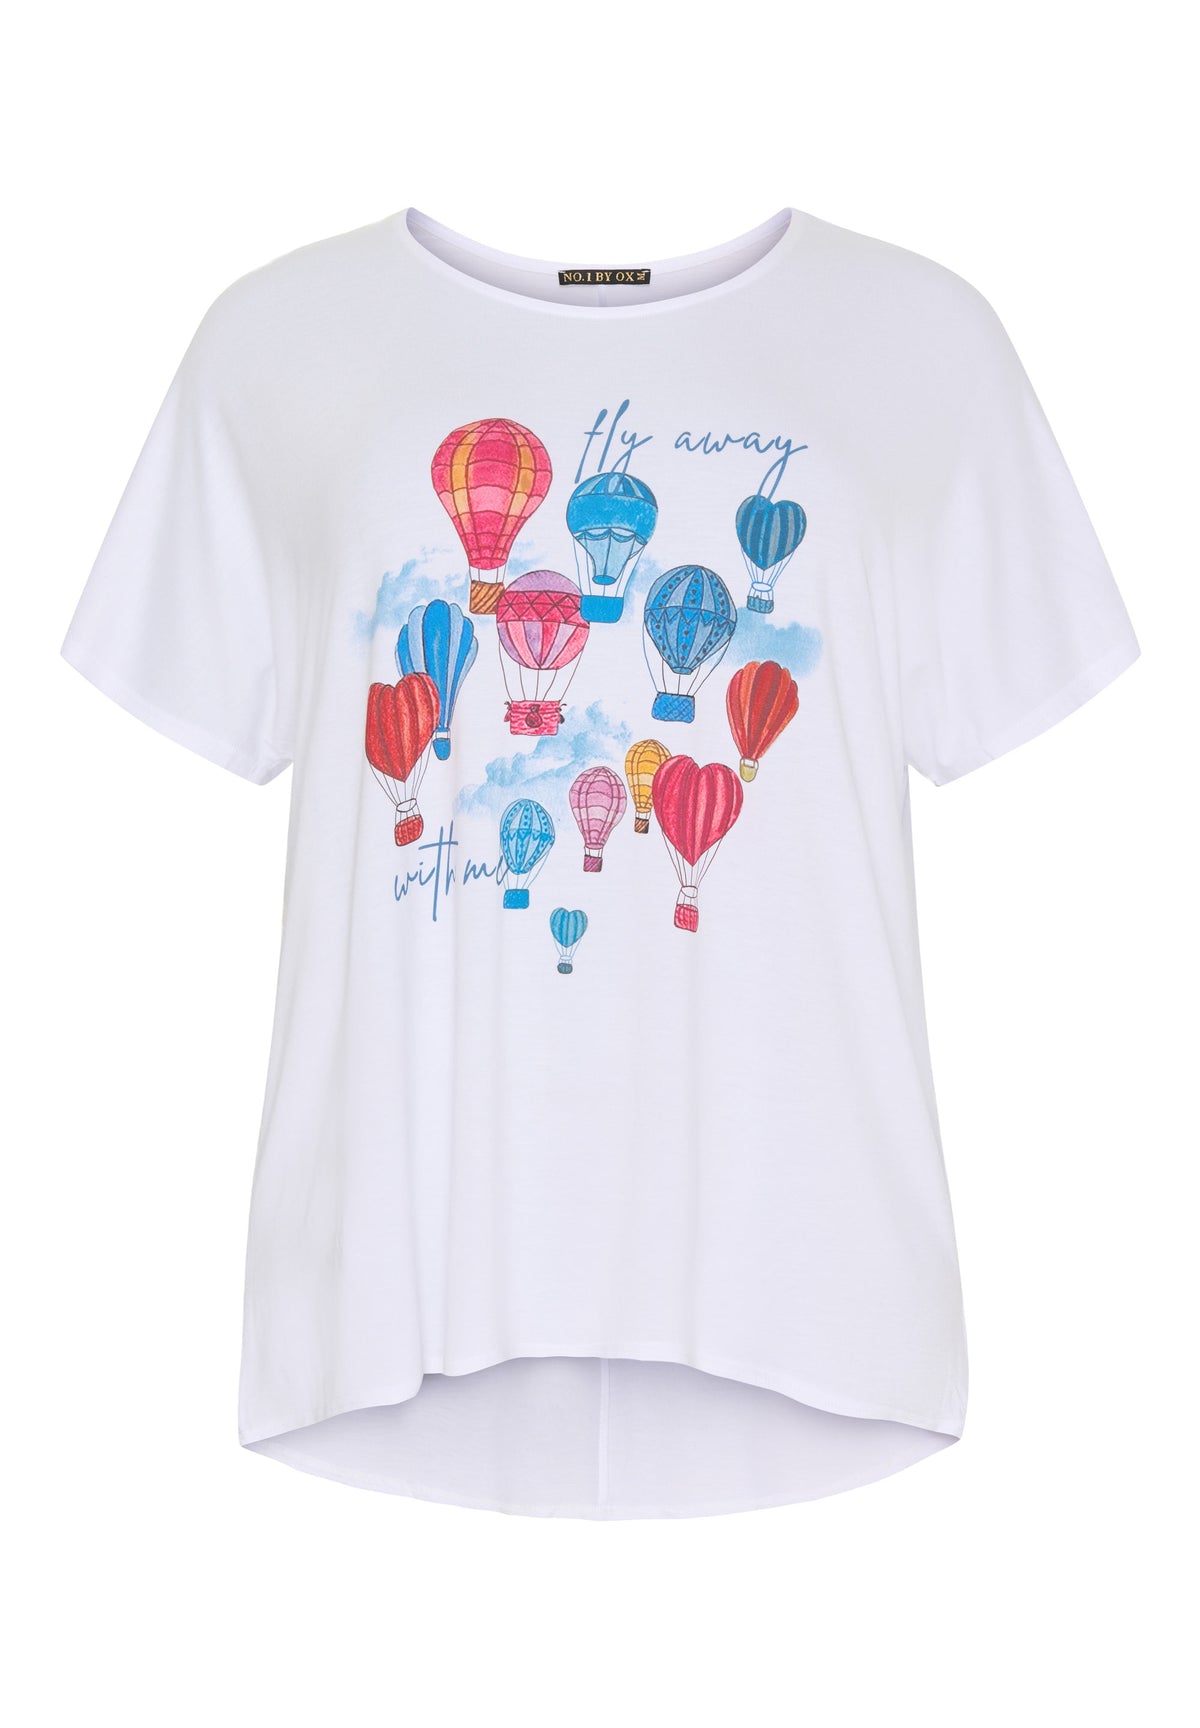 NO. 1 BY OX T-shirt med luftballon T-shirts Hvid